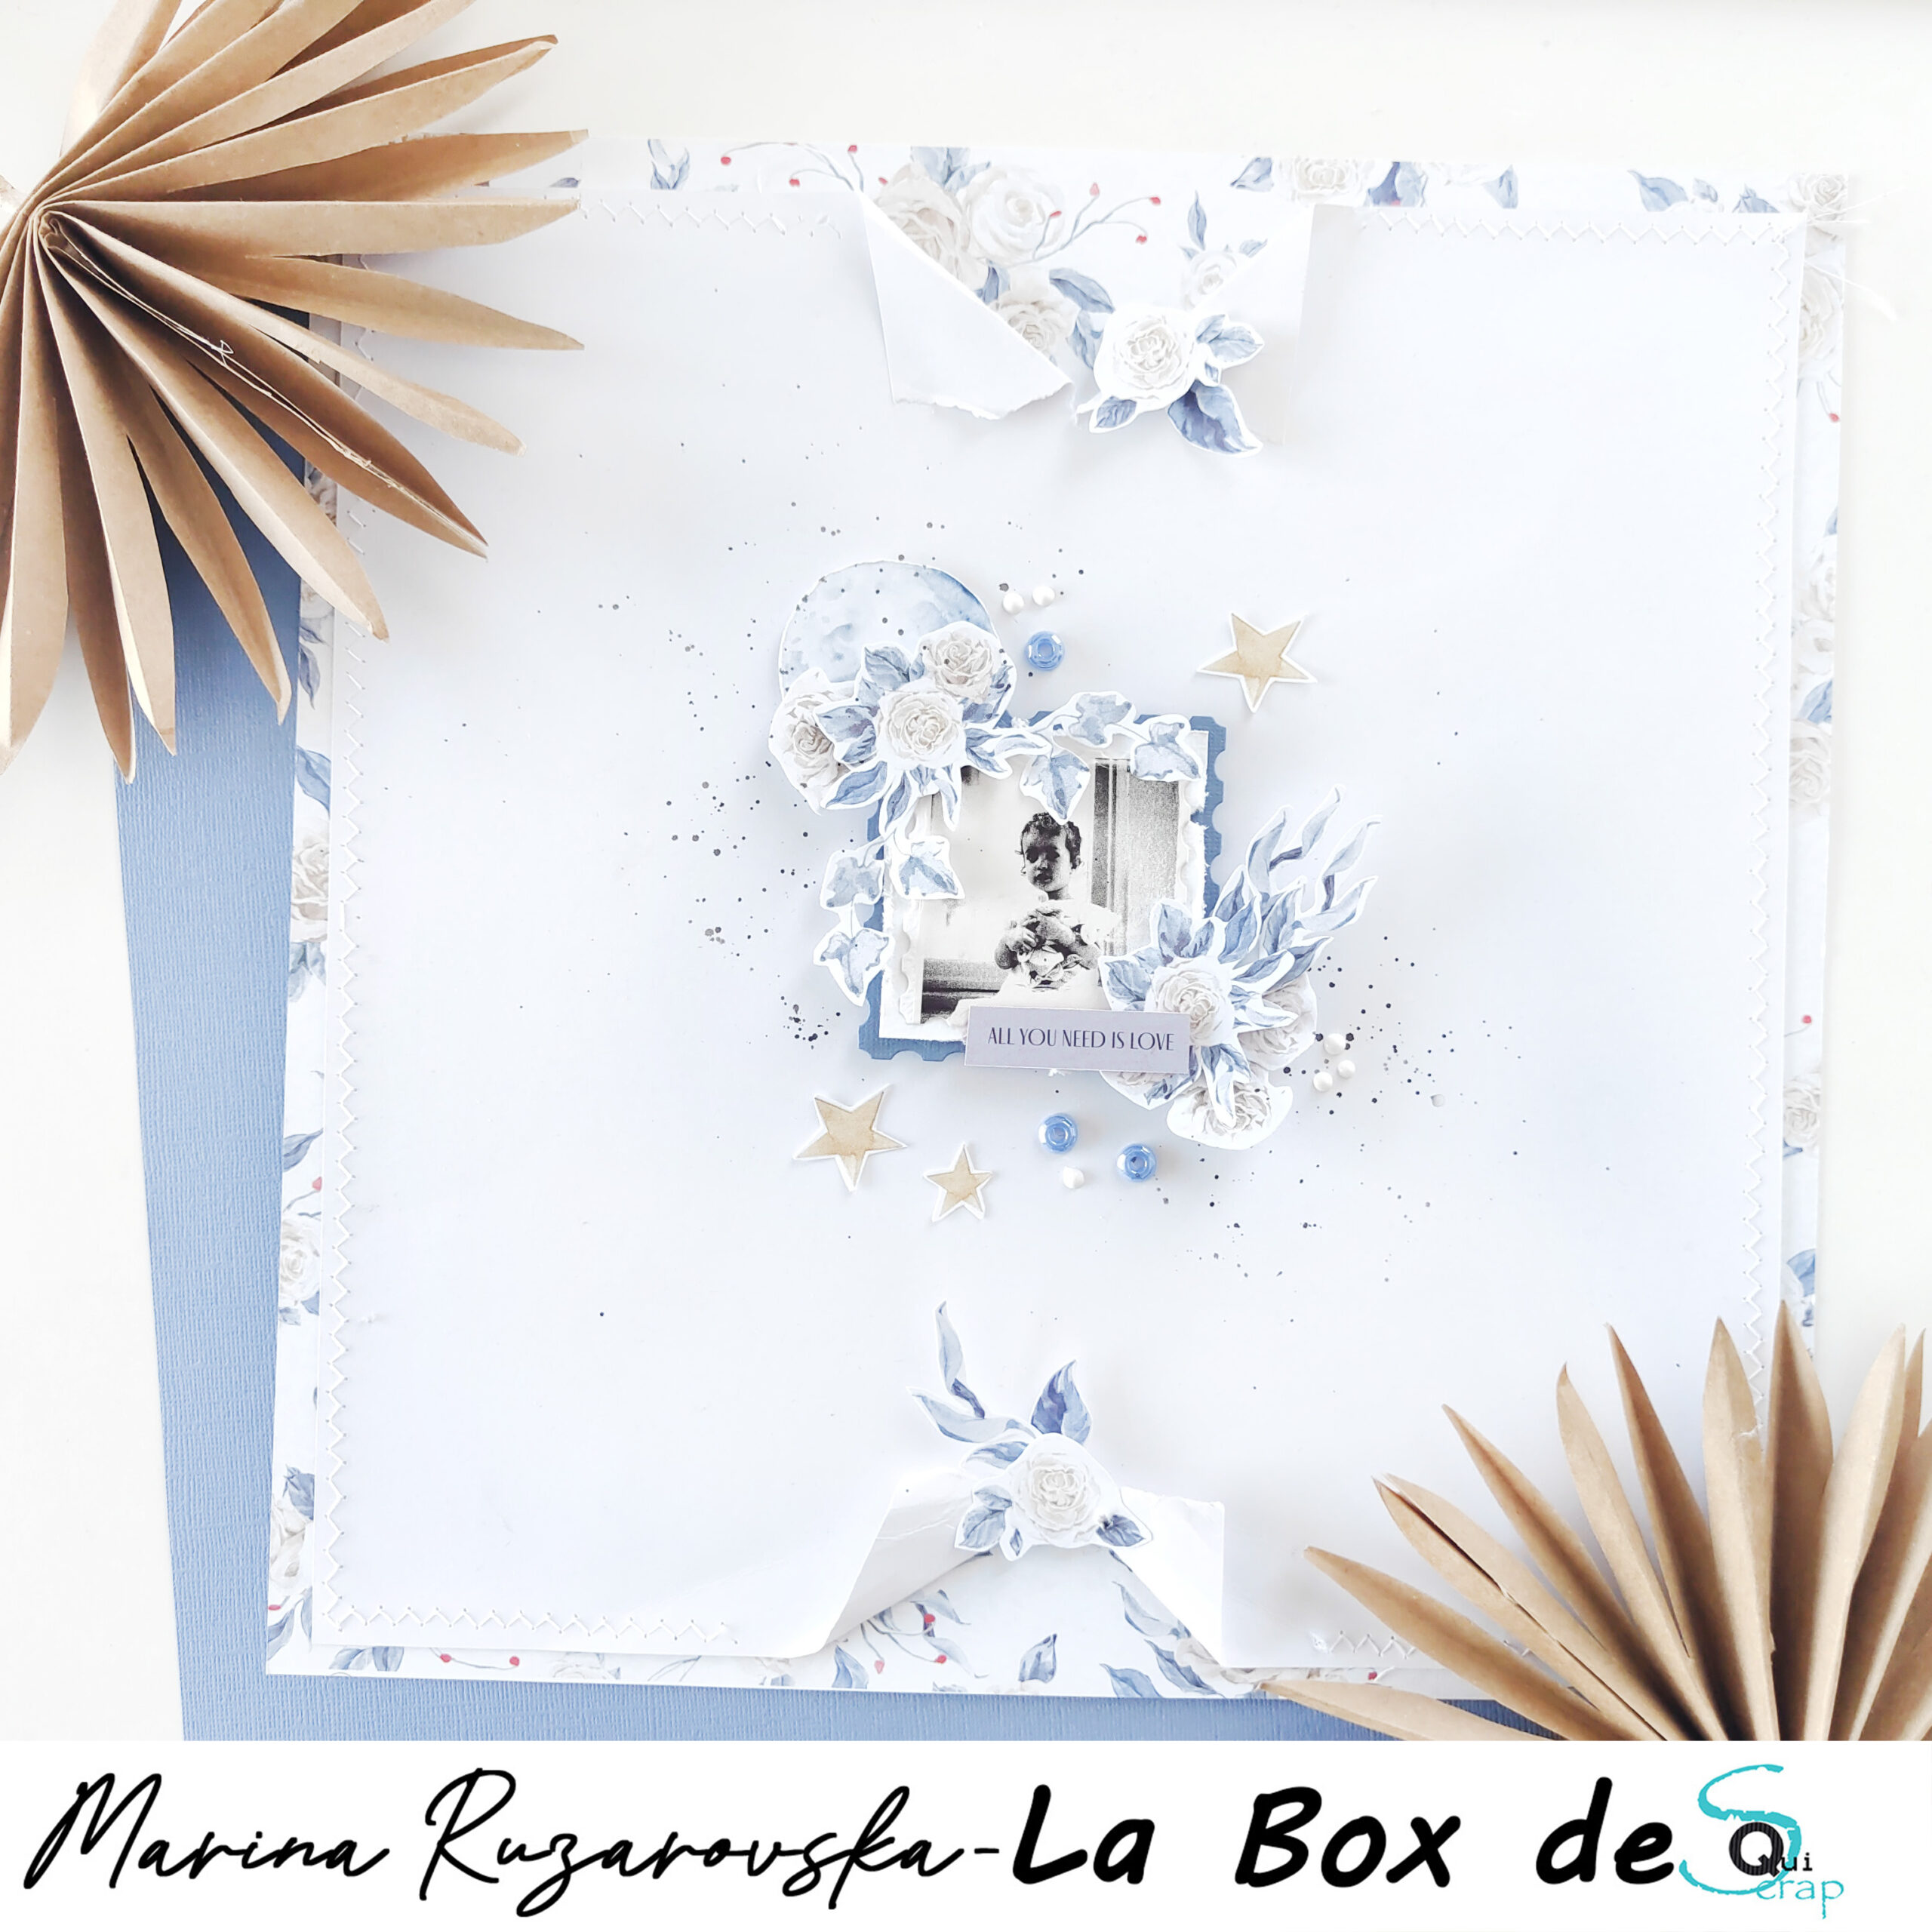 You are currently viewing Tuto n°1 pour la Box d’Avril 2023 par Marina Ruzarovska: la page de scrap